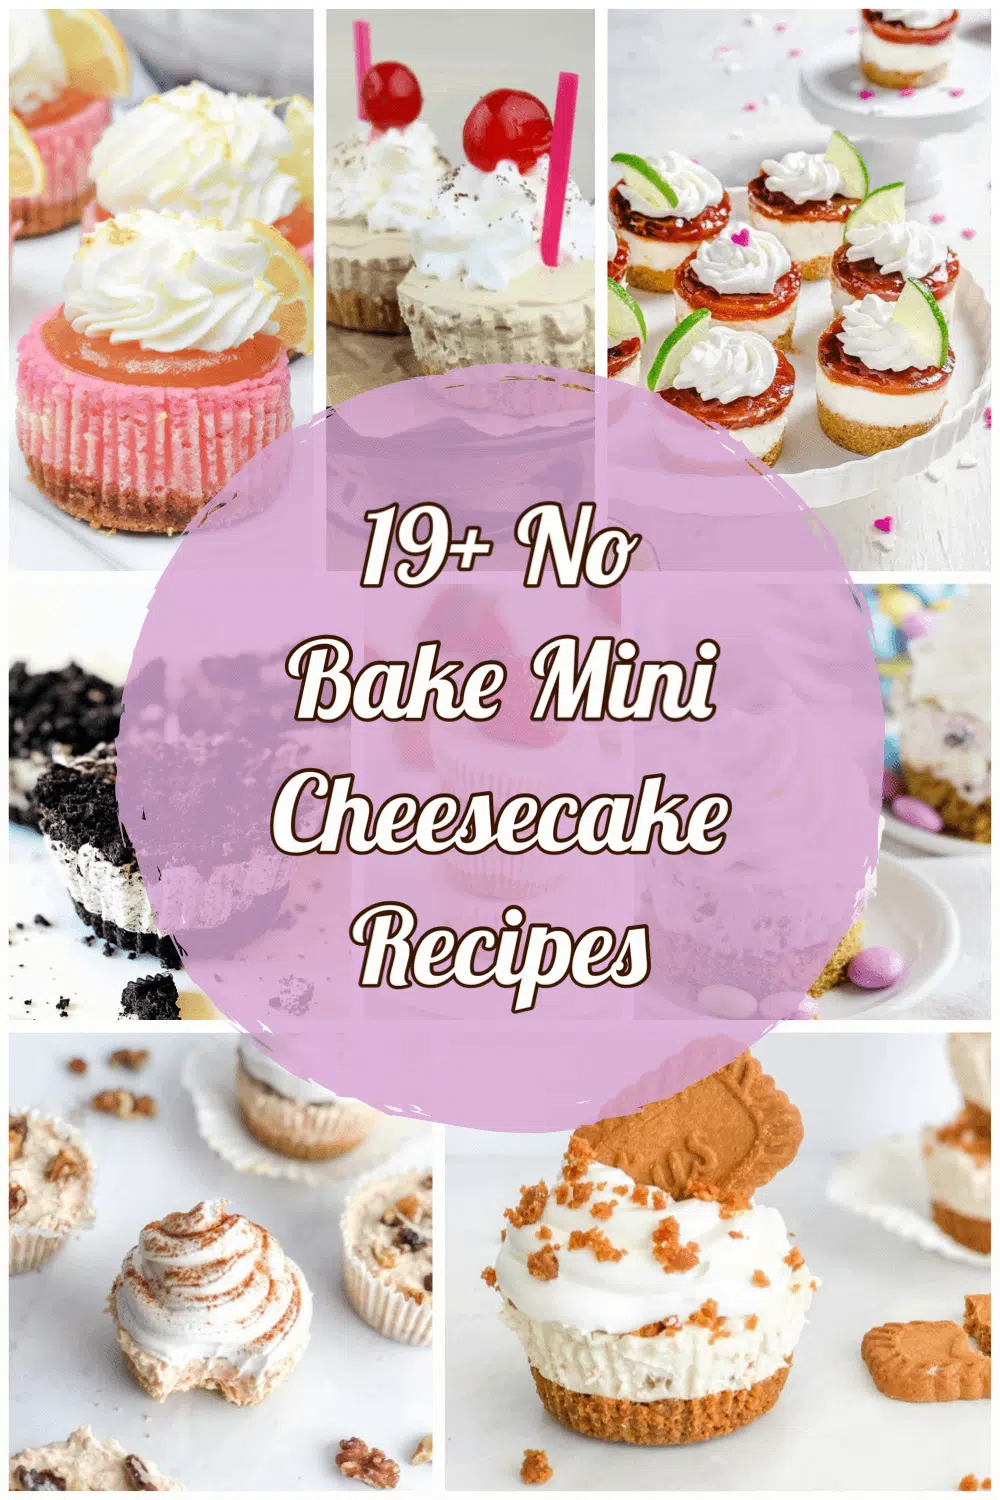 19+ No Bake Mini Cheesecake Recipes Pinterest